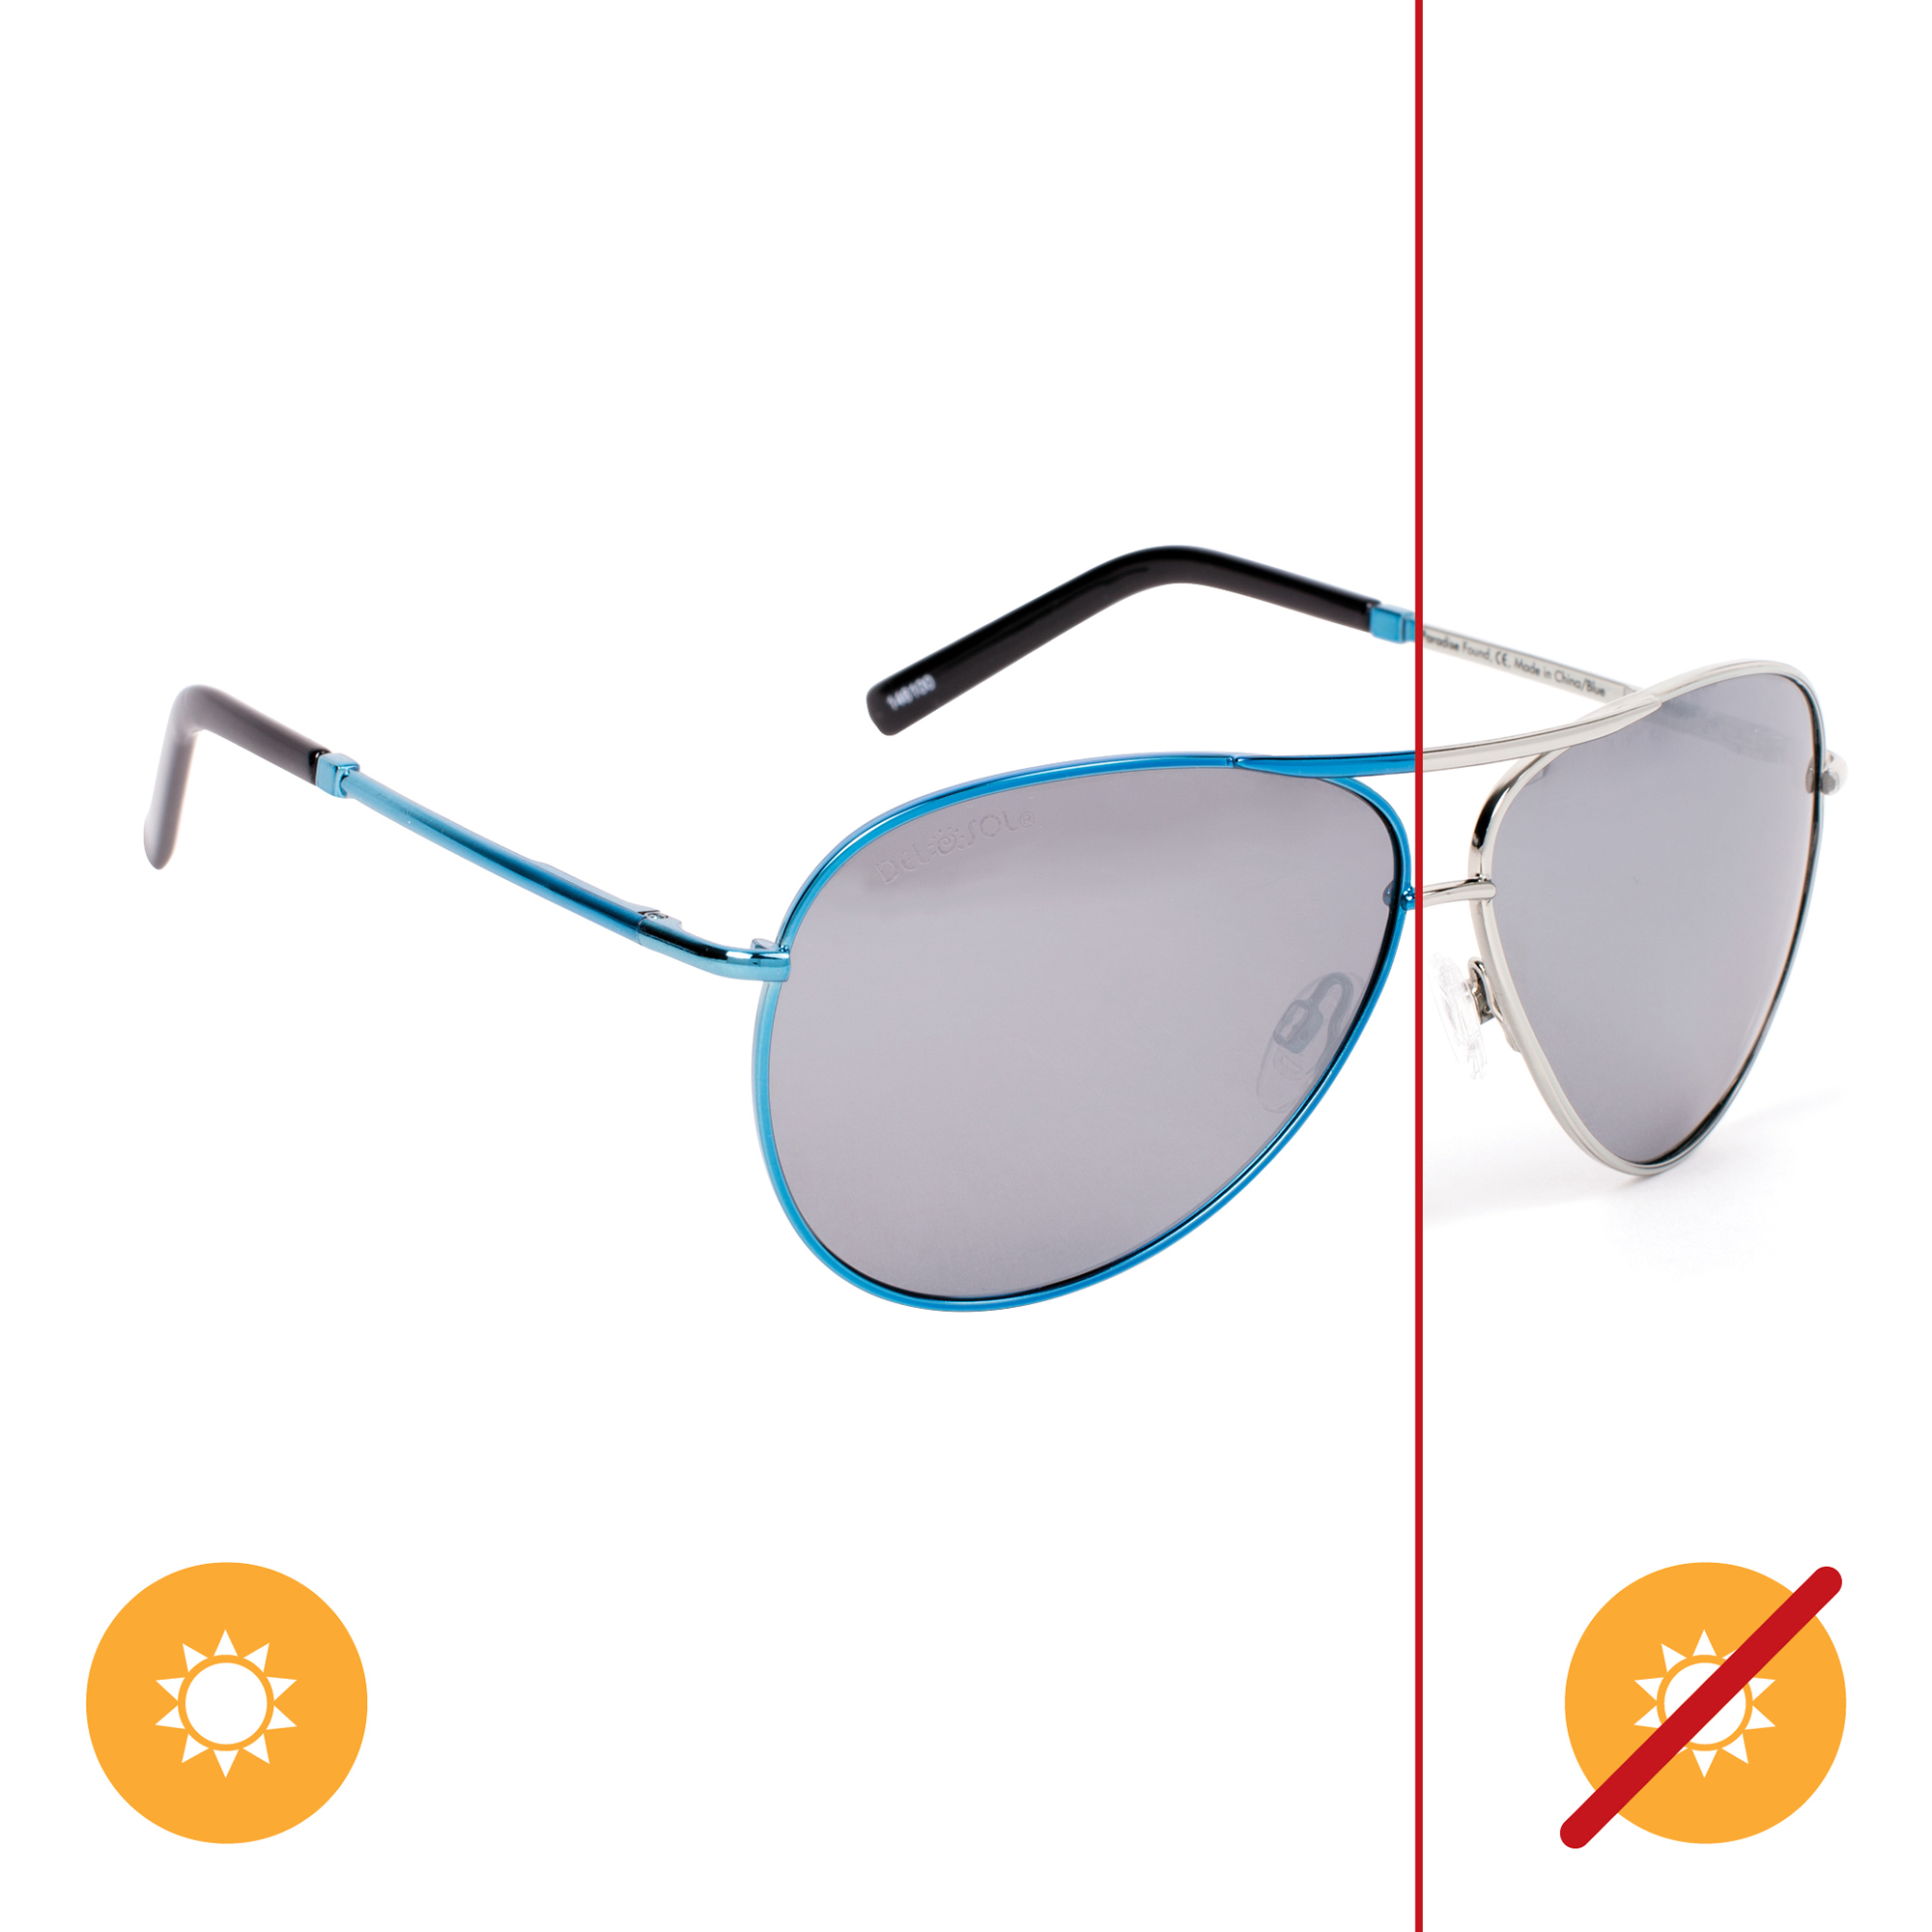 Del Sol Solize Paradise Found - Silver-Blue for Unisex 1 Pc Sunglasses